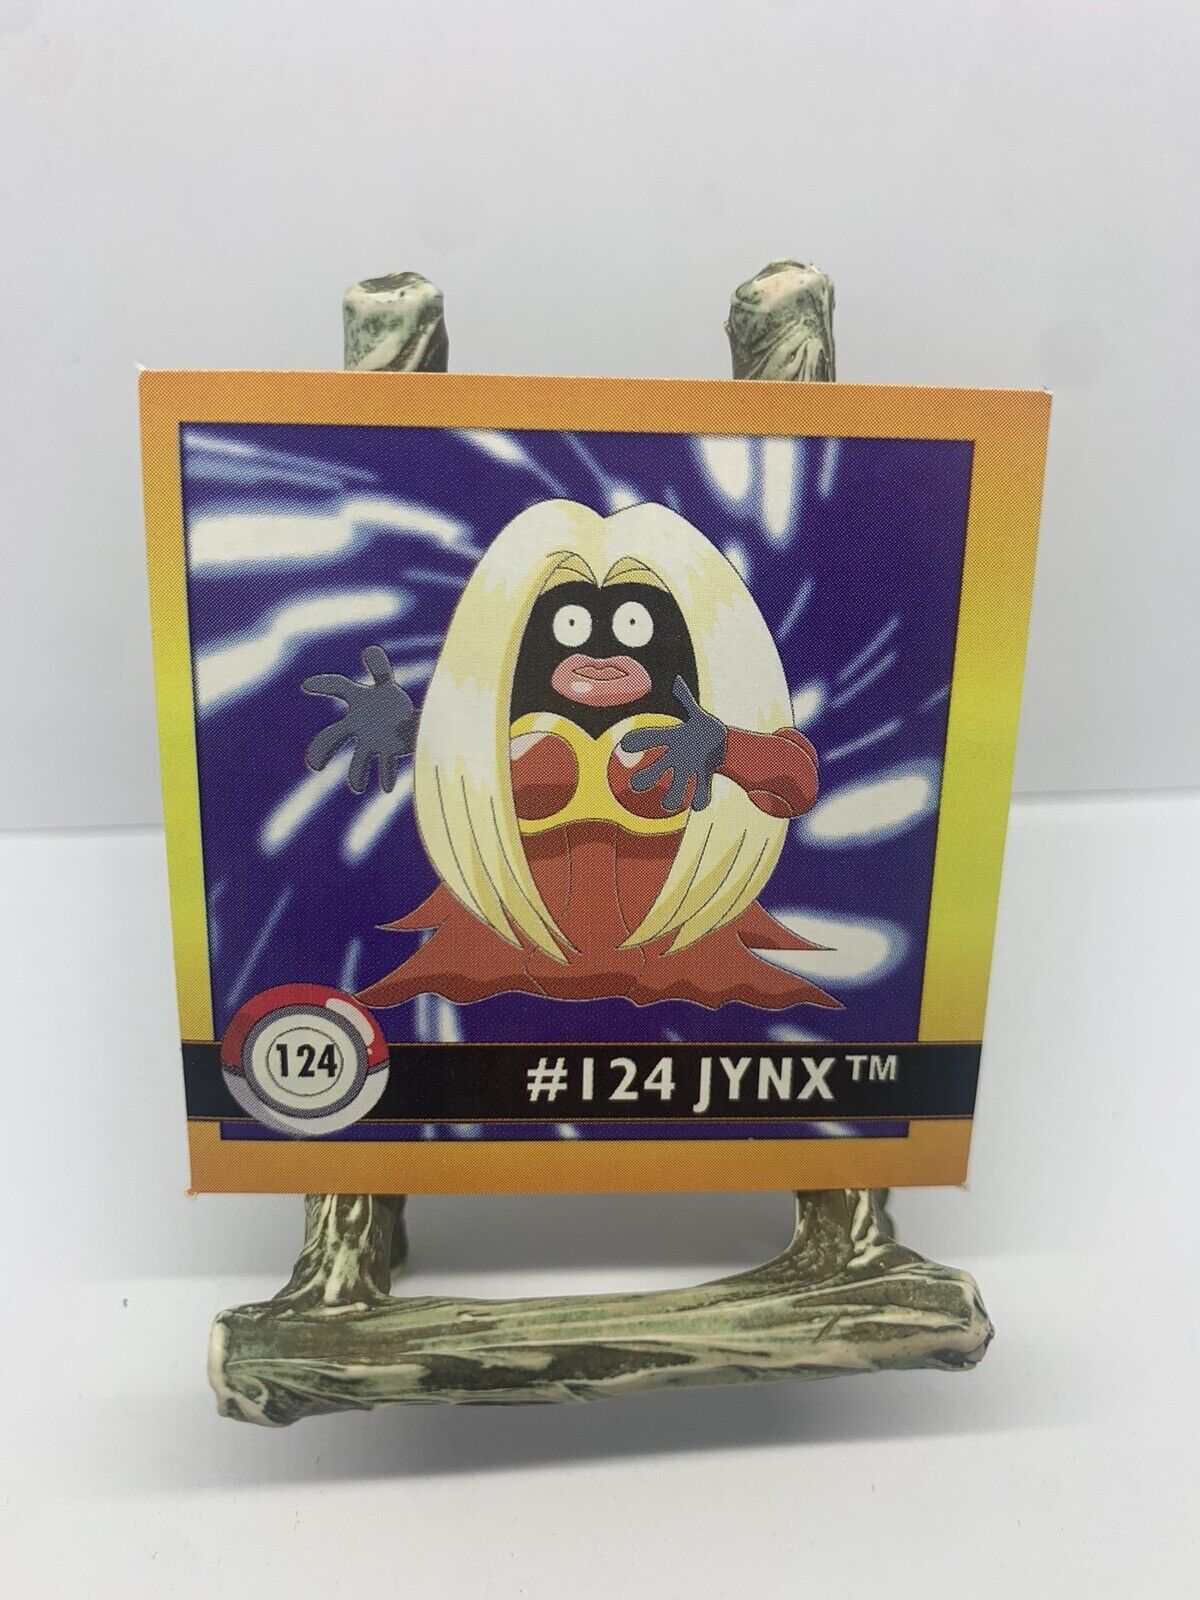 Jynx #124 Pokemon Nintendo JPP Amada Artbox Action Card